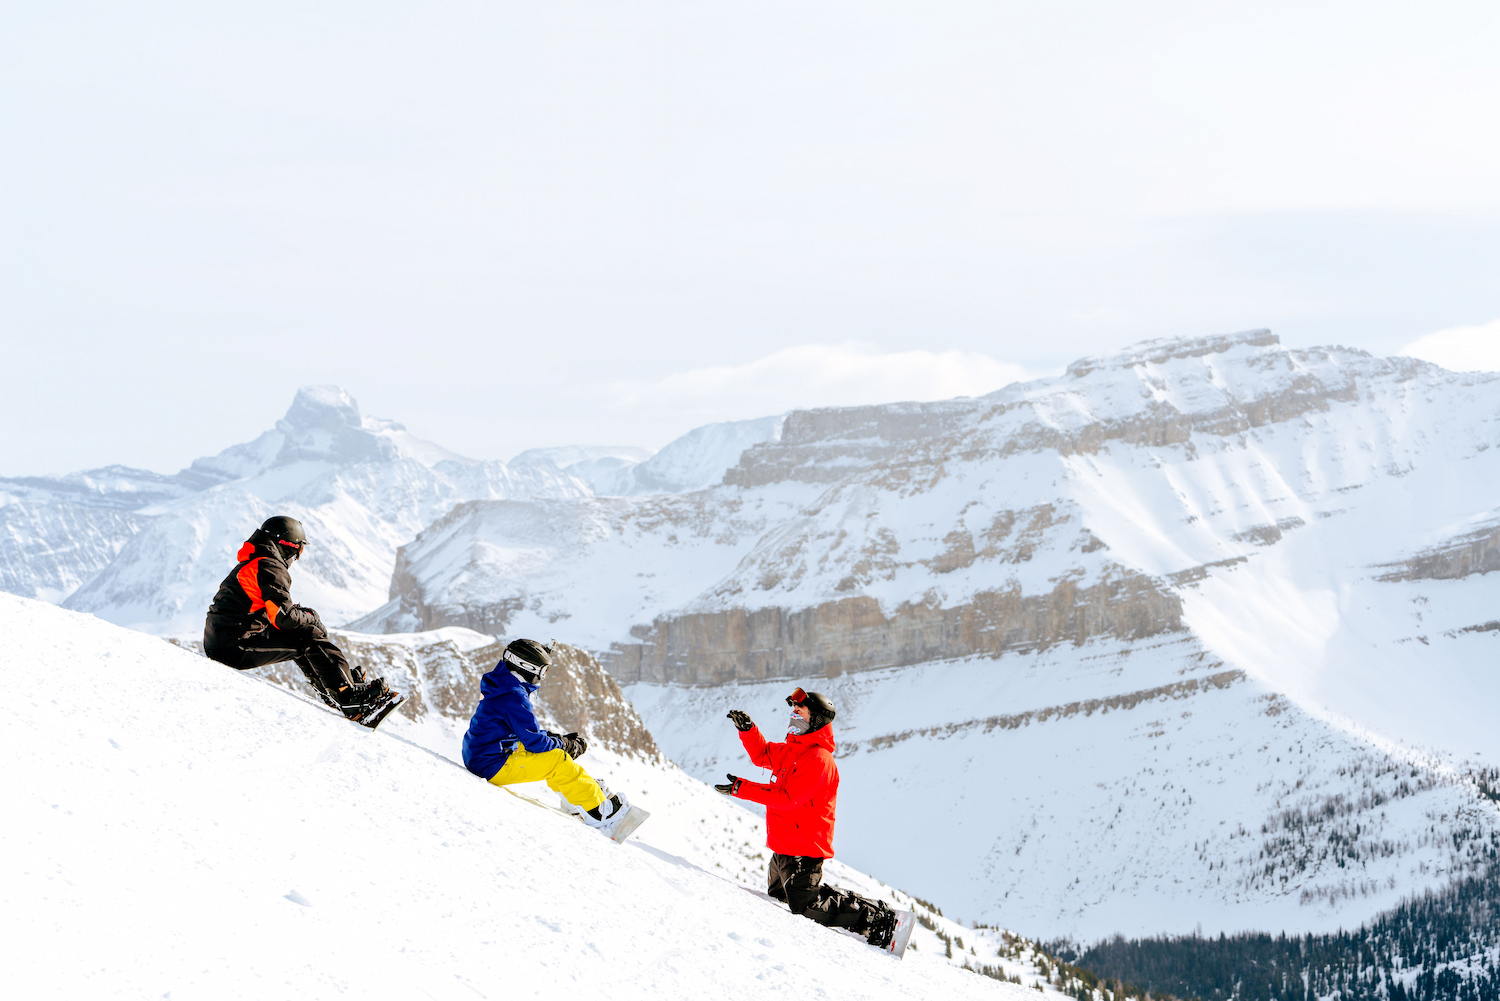 How to Slide Sideways - Online Ski Lessons - Mechanics of Skiing